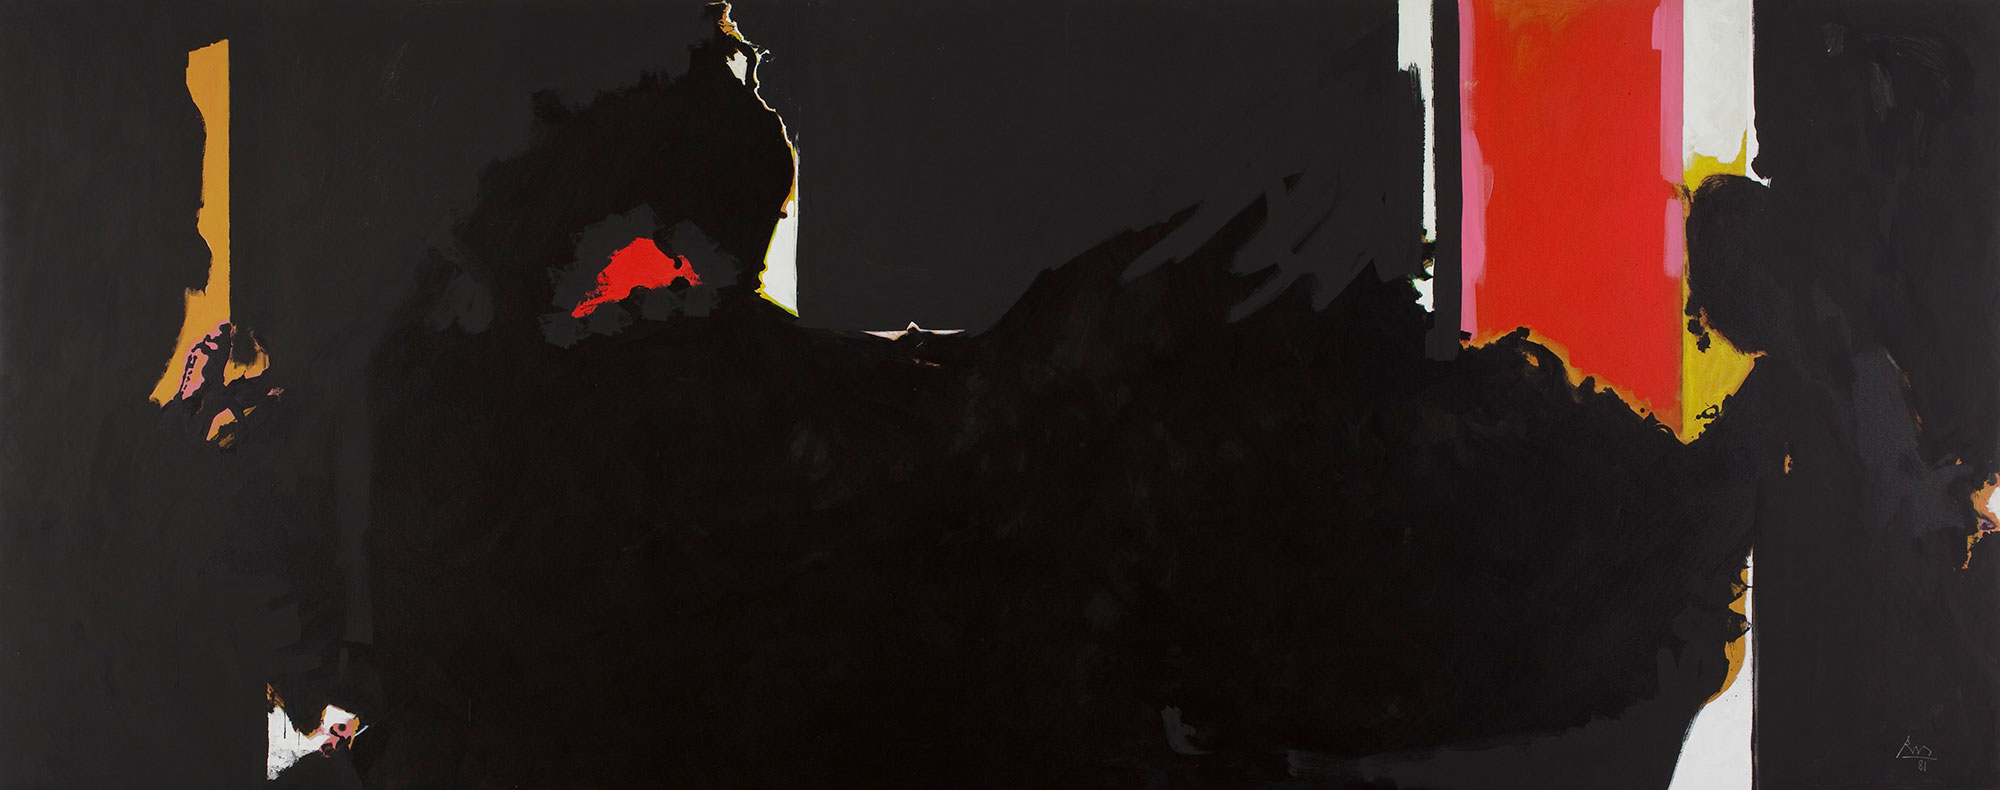 Robert Motherwell, Face of the Night (For Octavio Paz), 1981